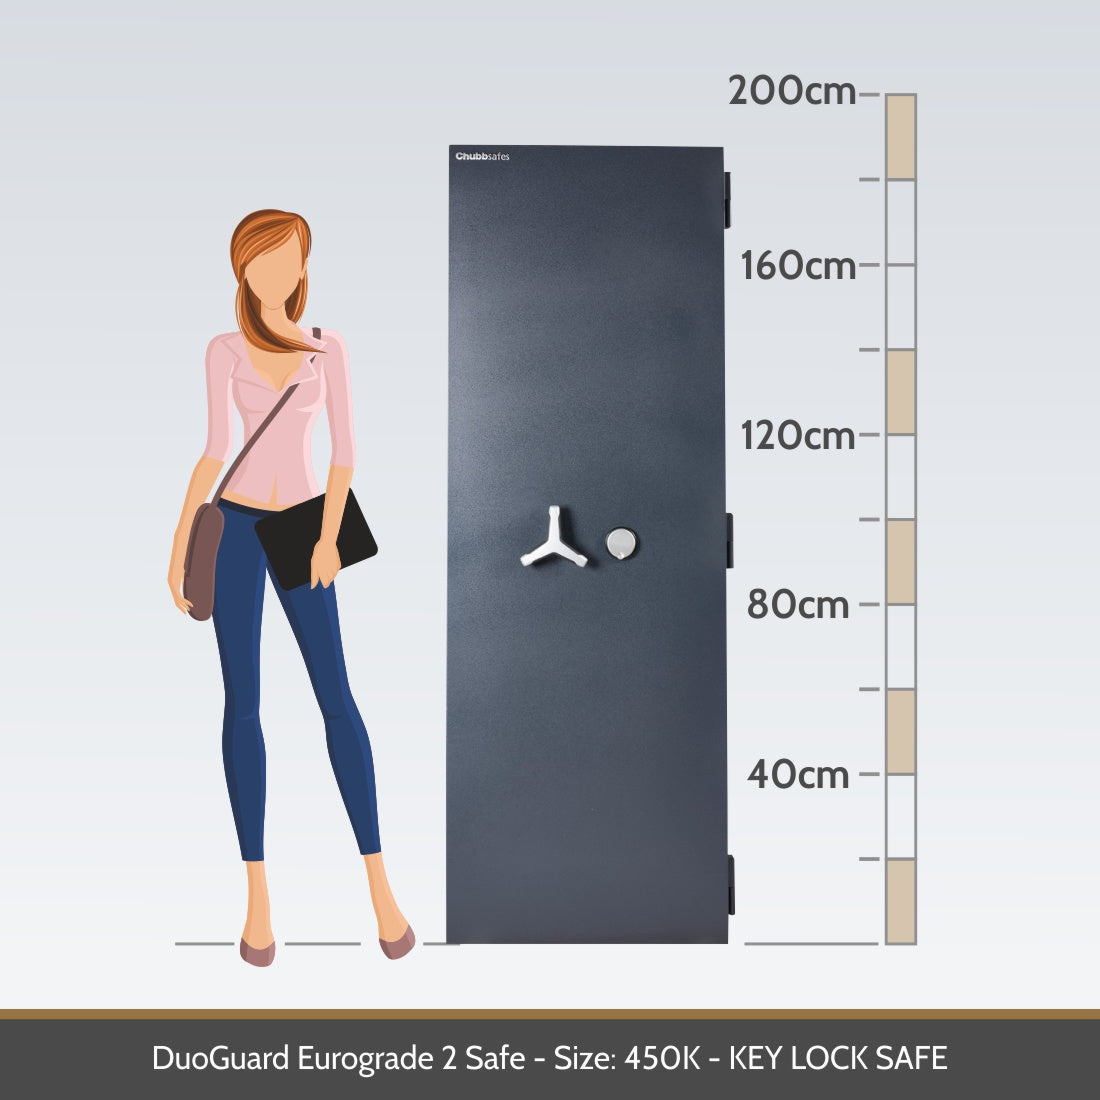 DuoGuard Eurograde 2 Safe Size 450K Key Lock